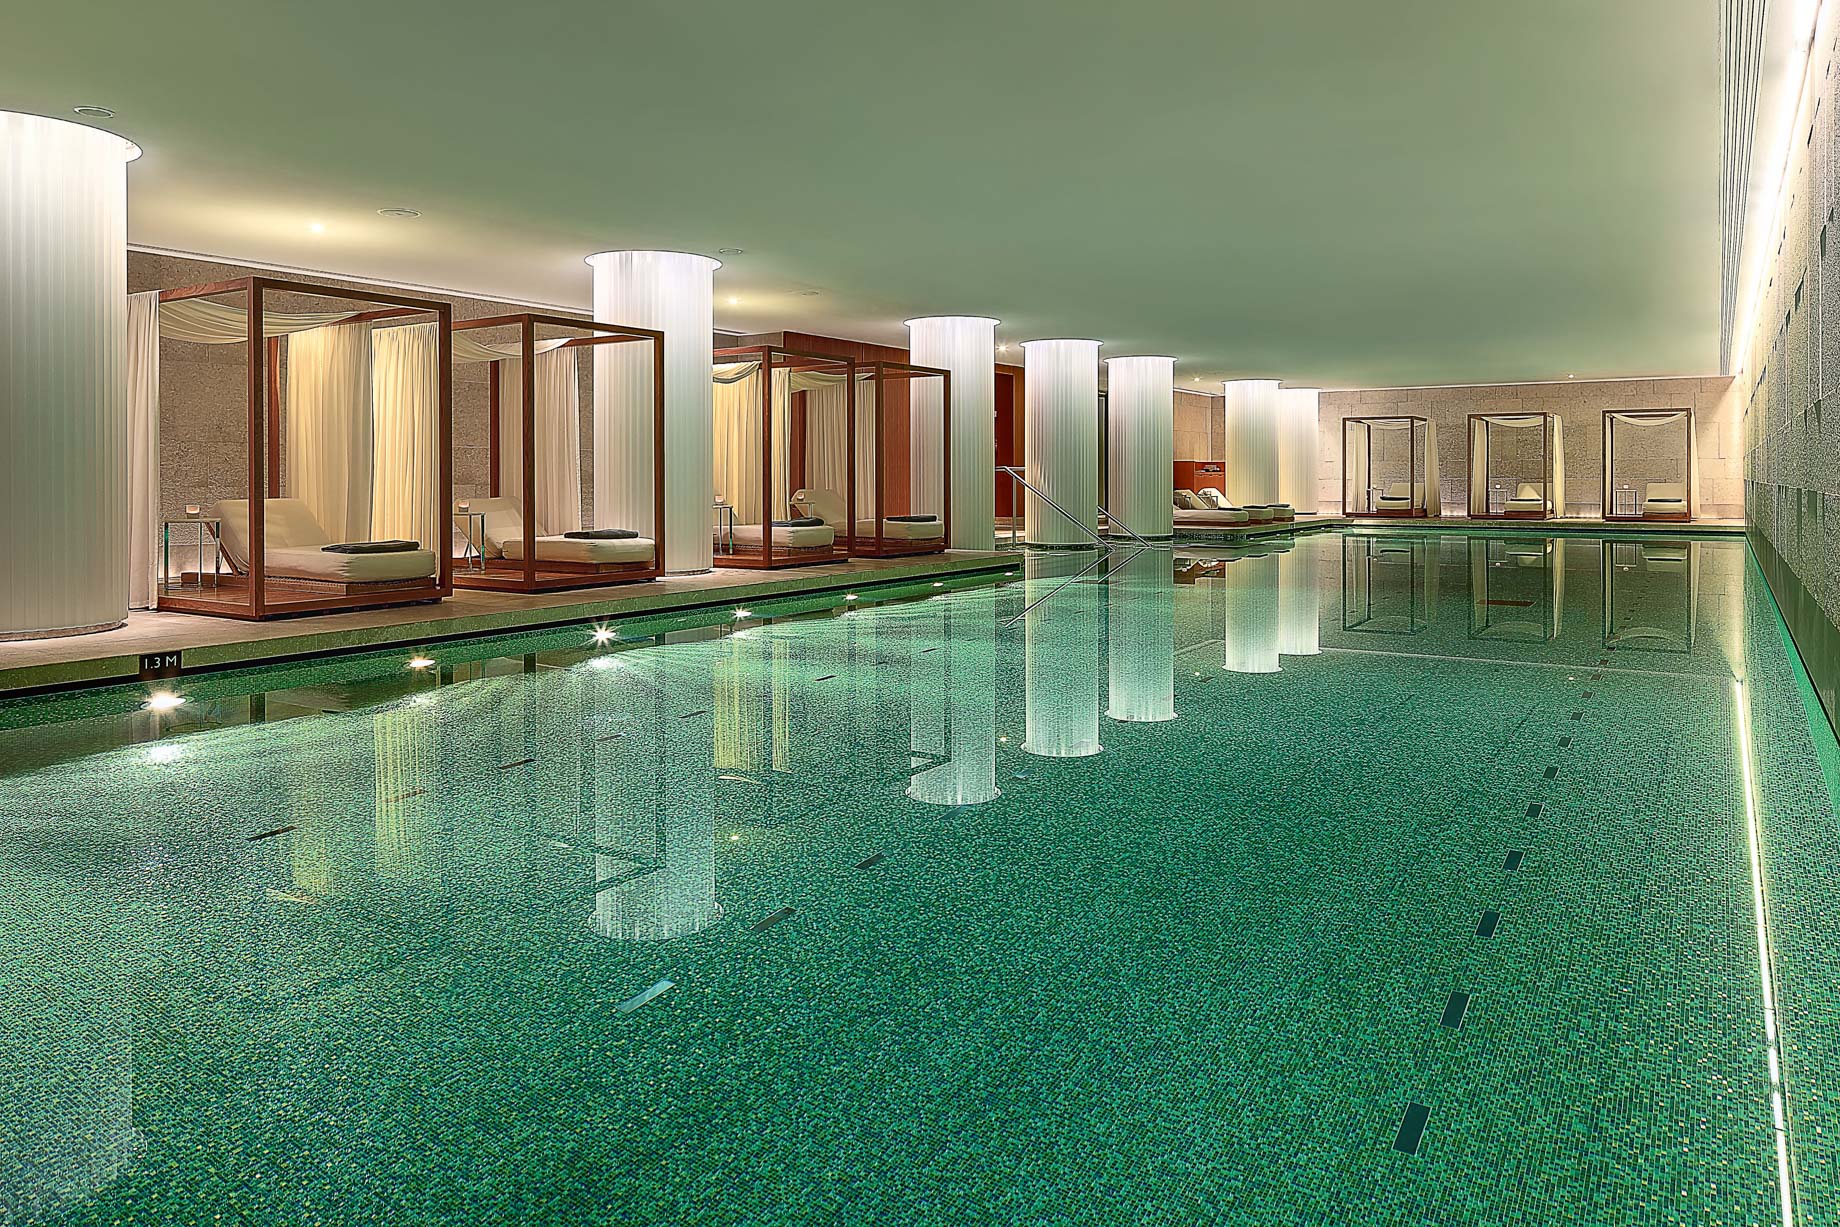 Bvlgari Hotel London – Knightsbridge, London, UK – Bvlgari Pool with Private Cabanas